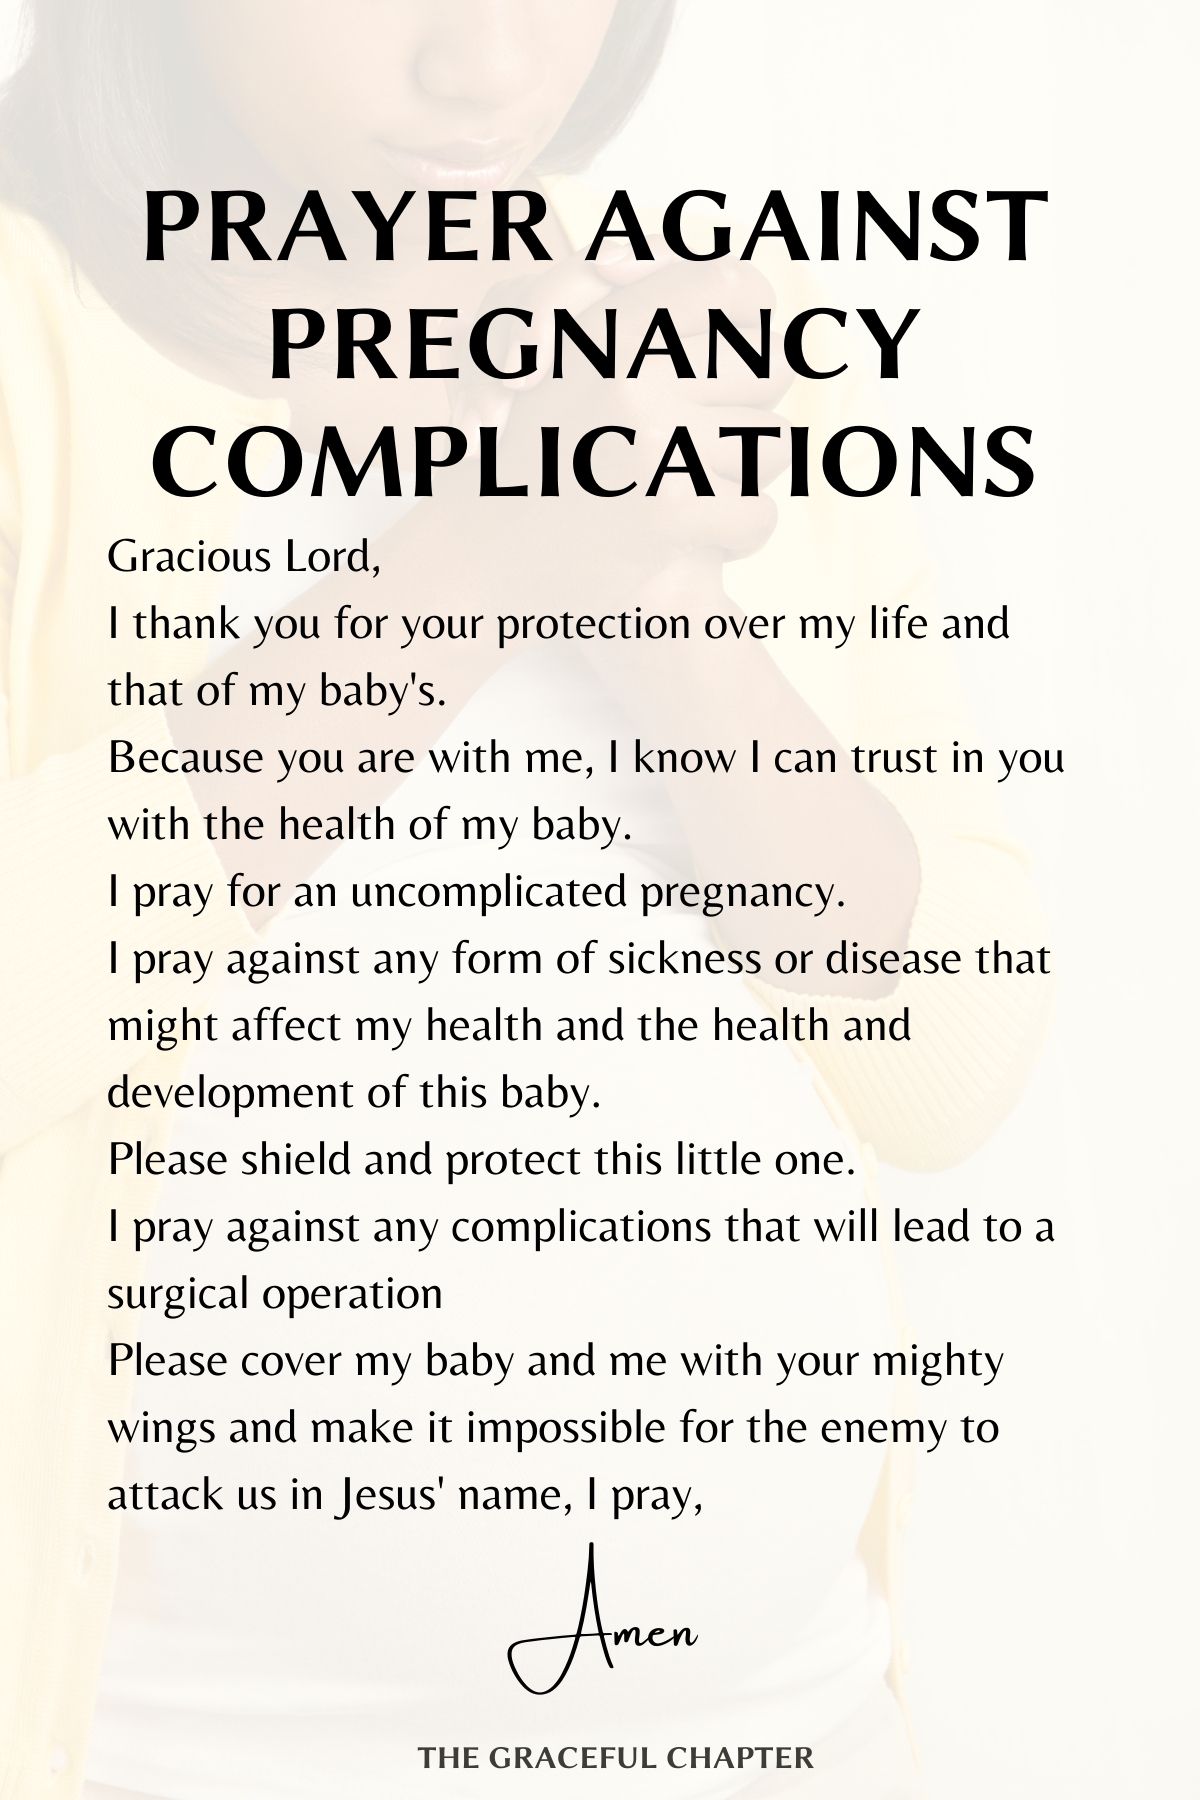 Prayer against pregnancy complications